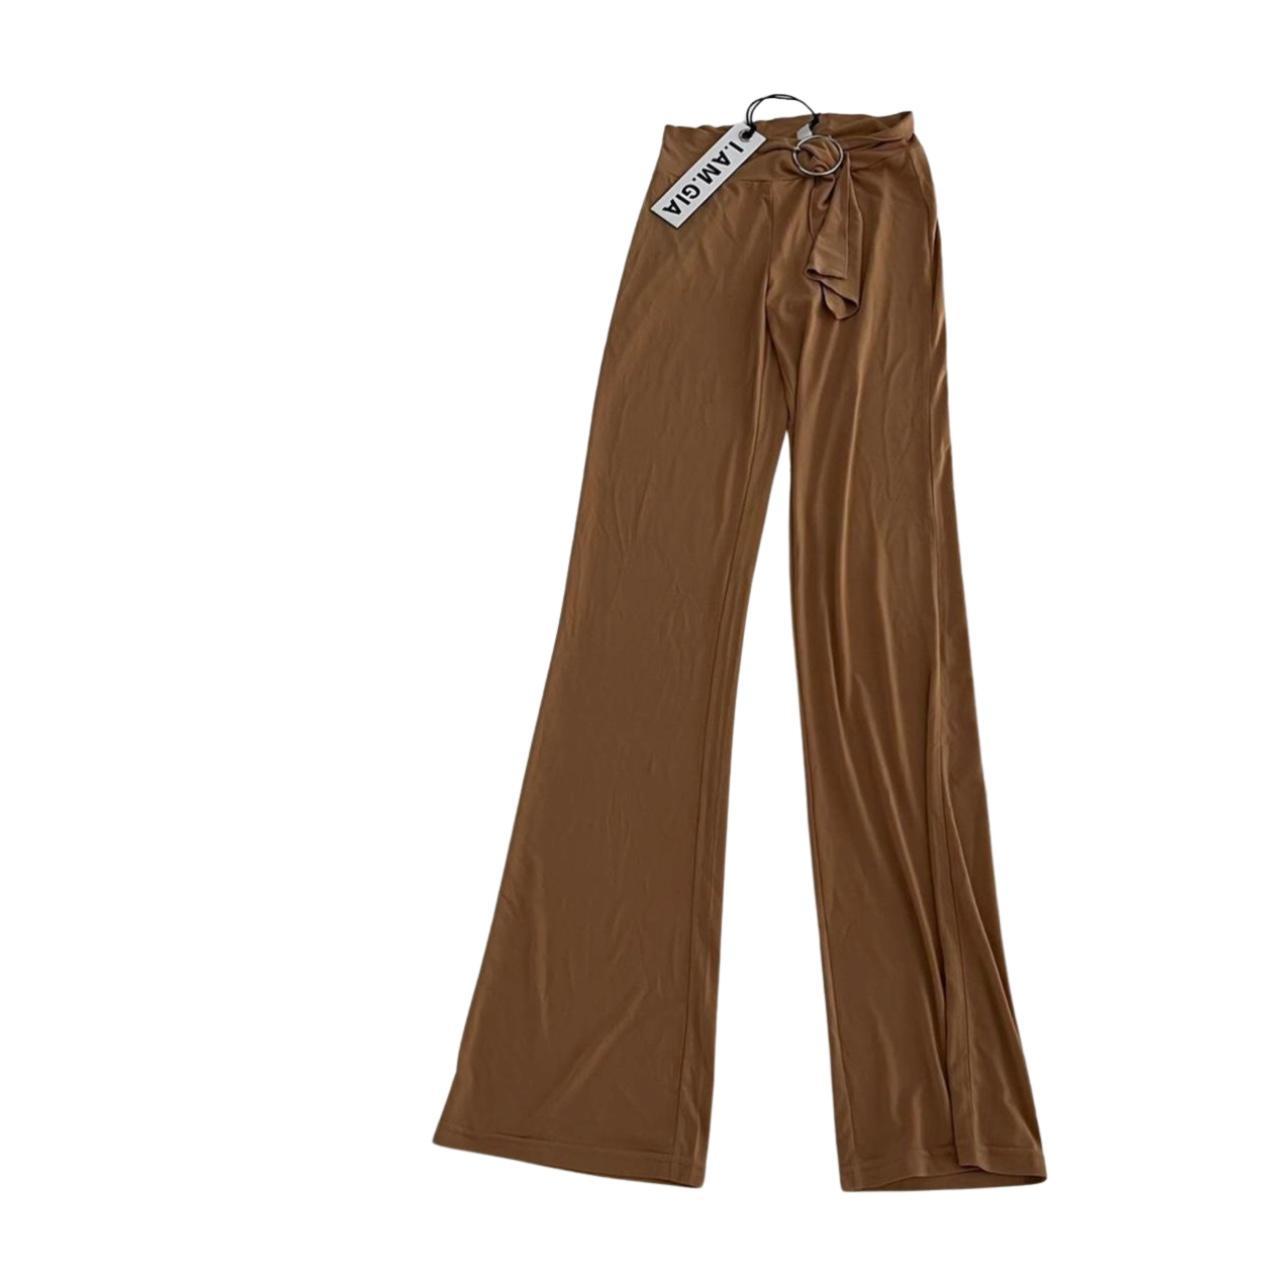 Product Image 1 - I.AM.GIA brand new tan pants
Size: